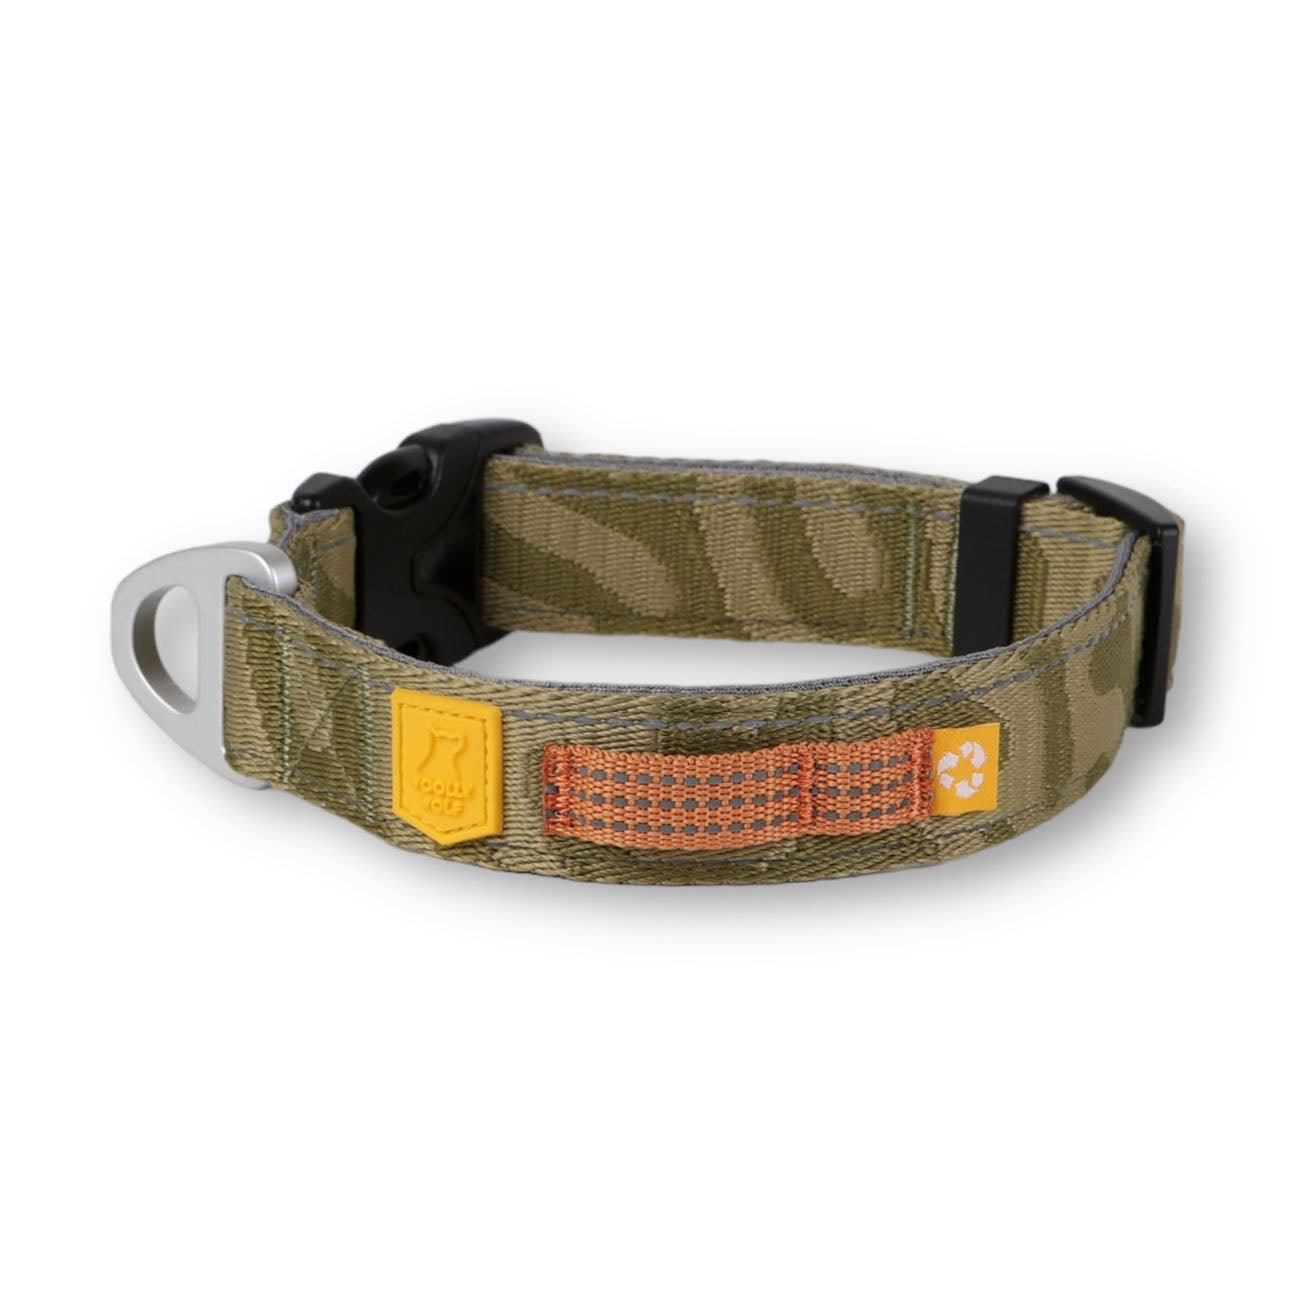 Lightweight and comfortable high quality dog collar